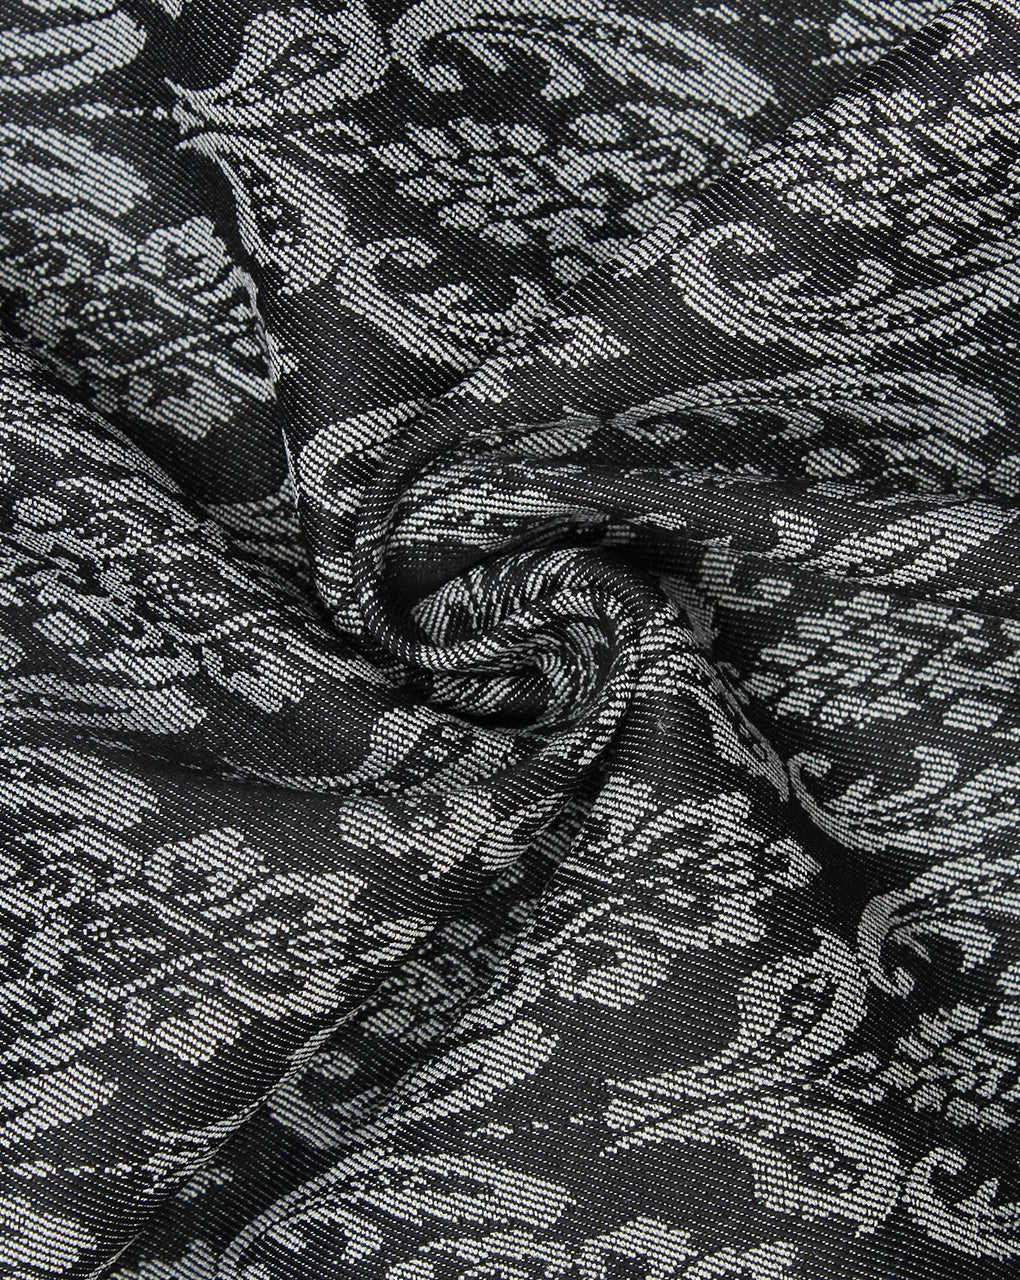 Grey And Black Floral Design 3 Denim Lycra Jacquard Fabric